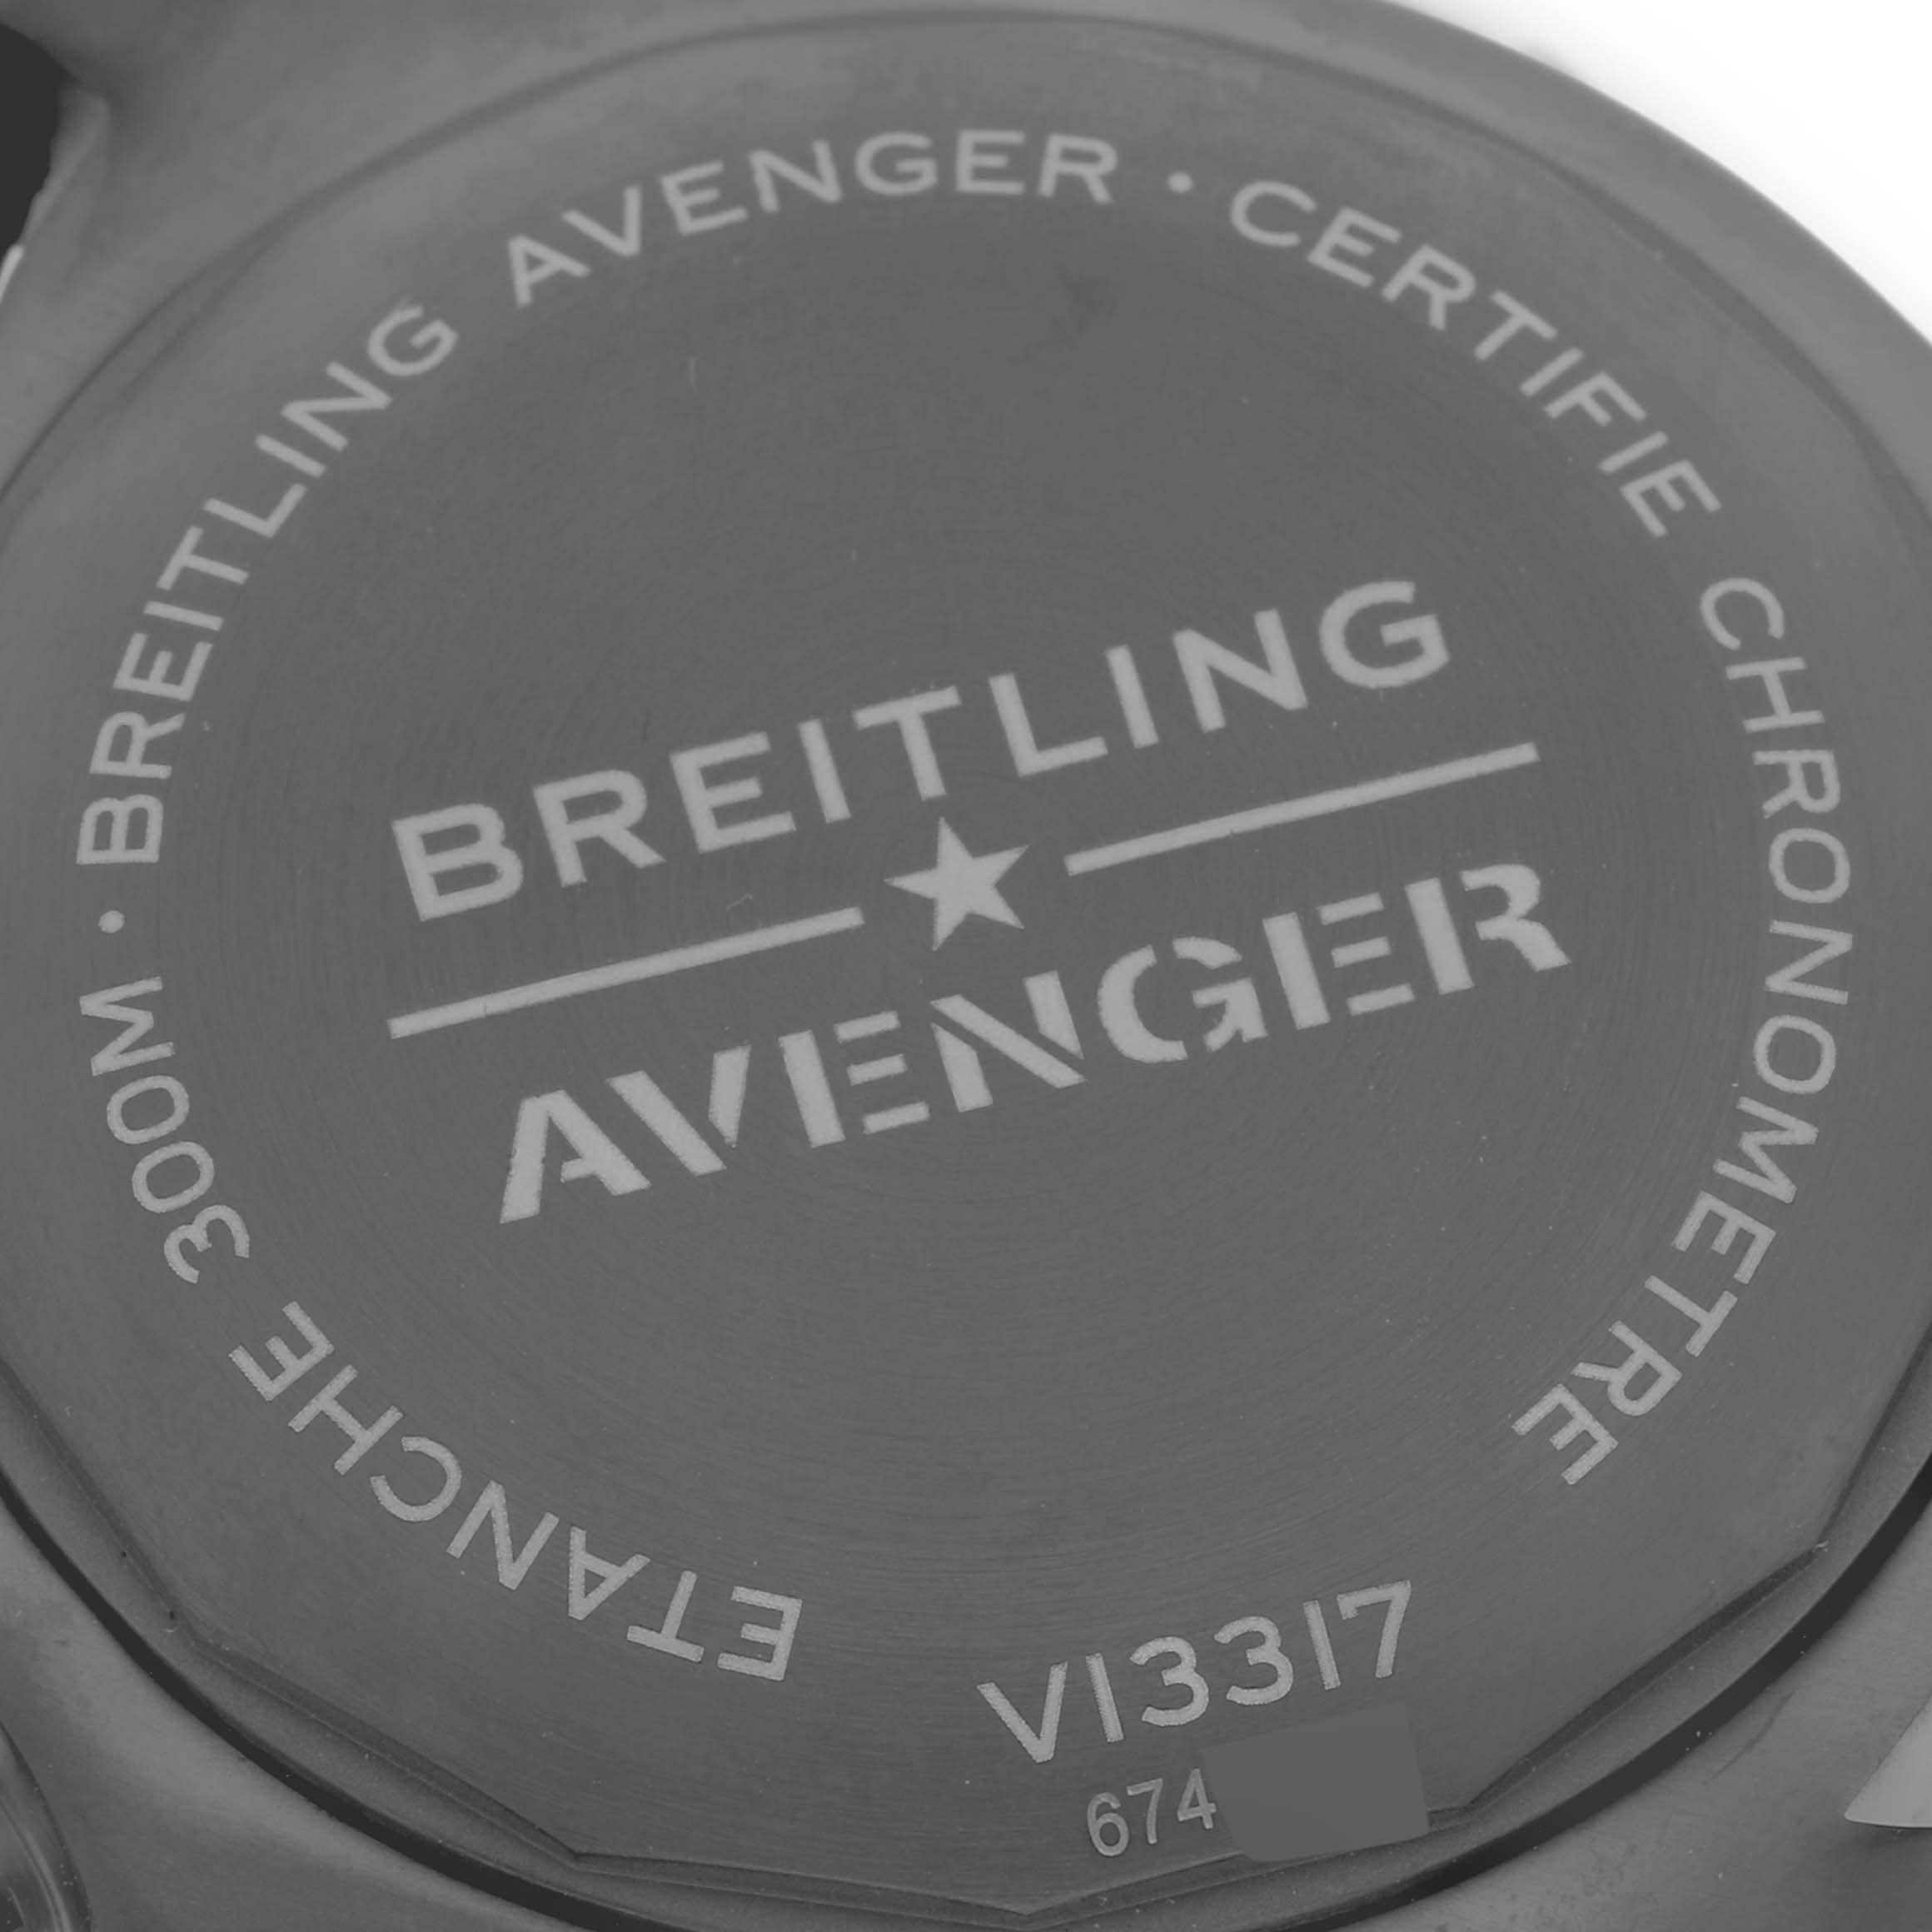 Breitling Avenger Night Mission DLC Coated Titanium Mens Watch V13317 Unworn For Sale 1